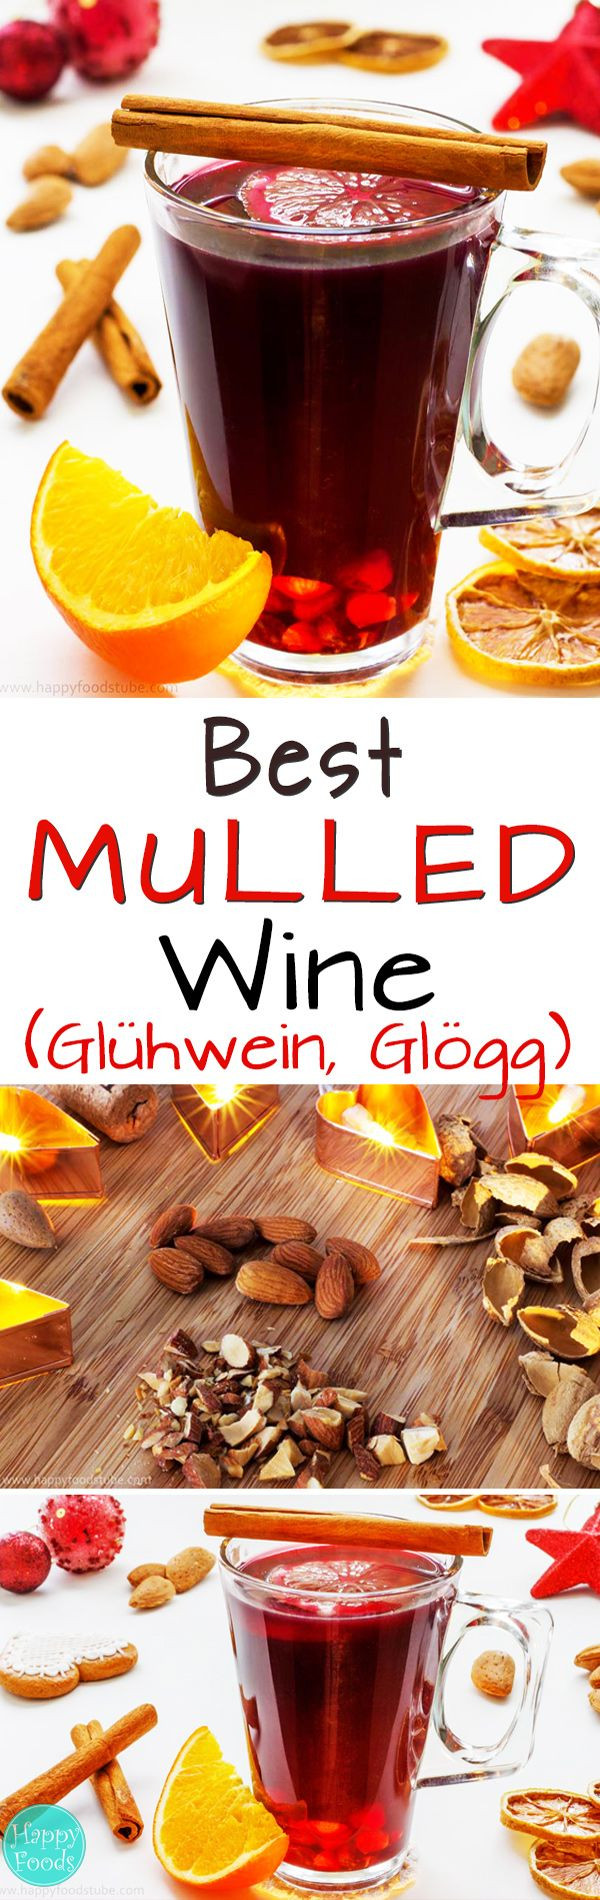 Christmas Mulled Wine Recipe
 Best 25 Mulled wine ideas on Pinterest